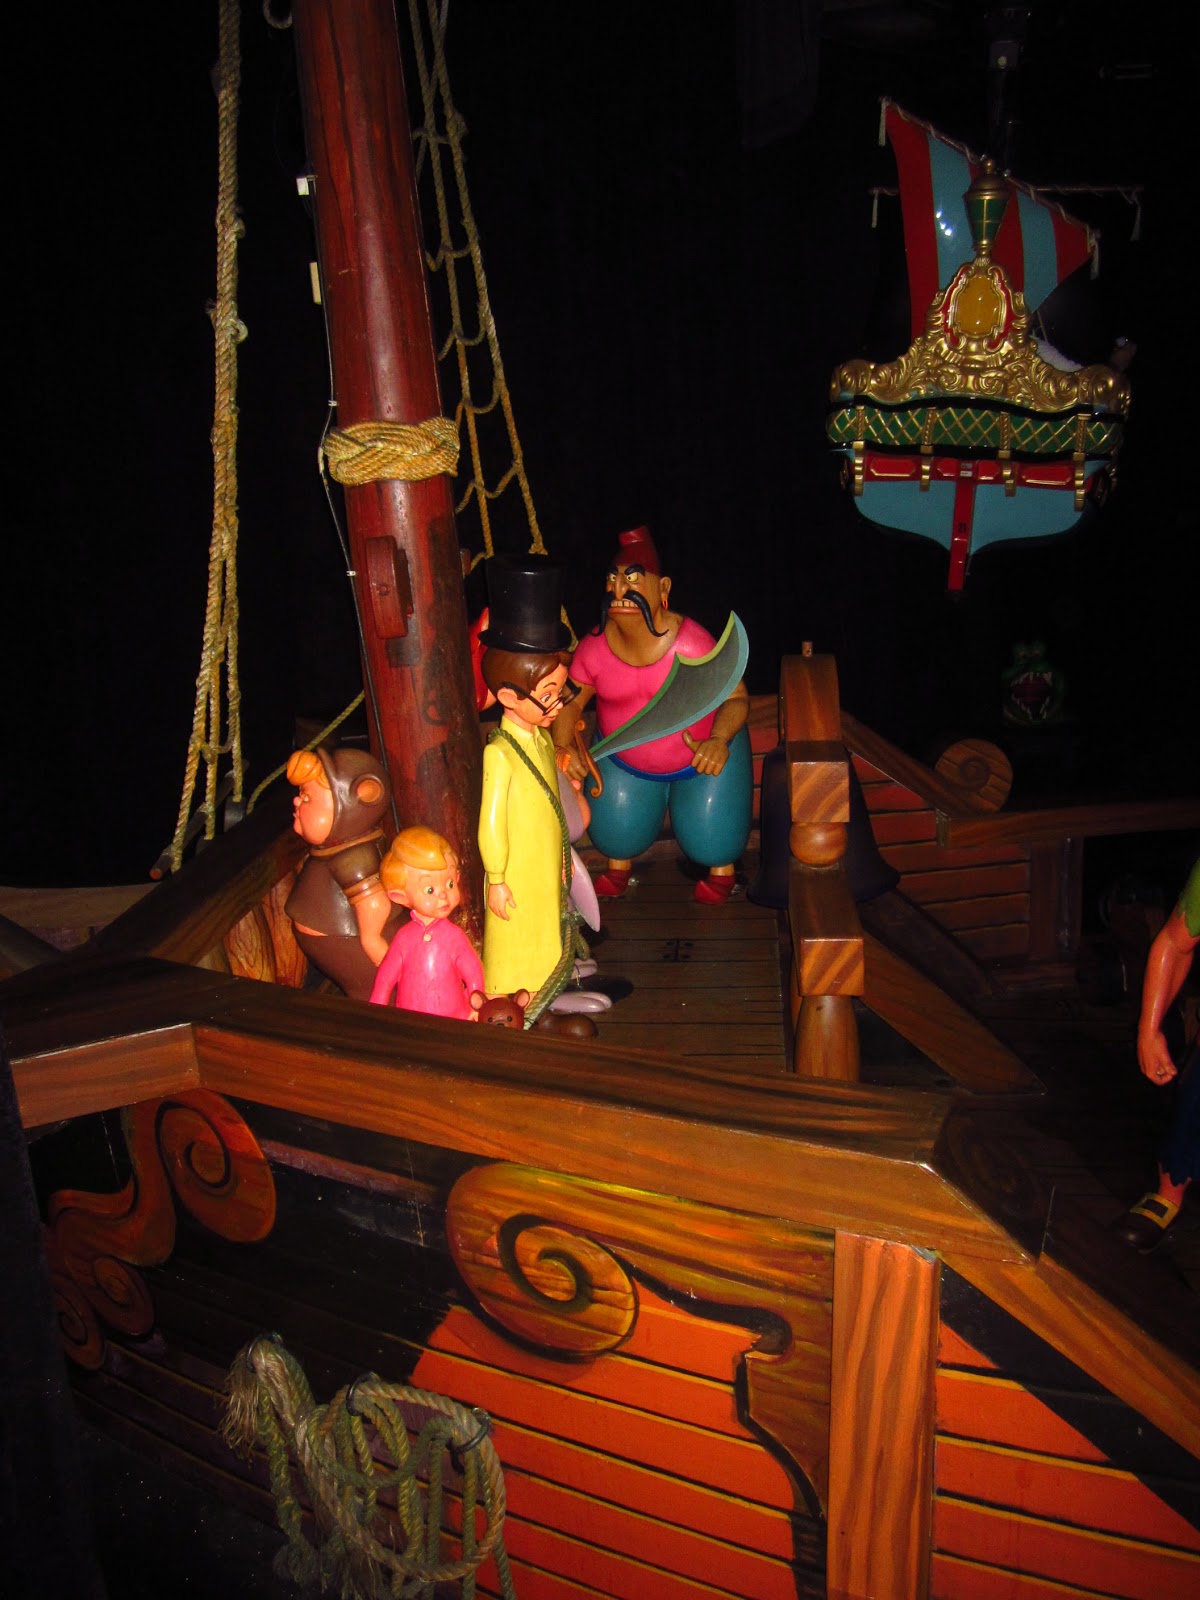 Peter Pan S Flight Review Walt Disney World Tips From The Disney Divas And Devos